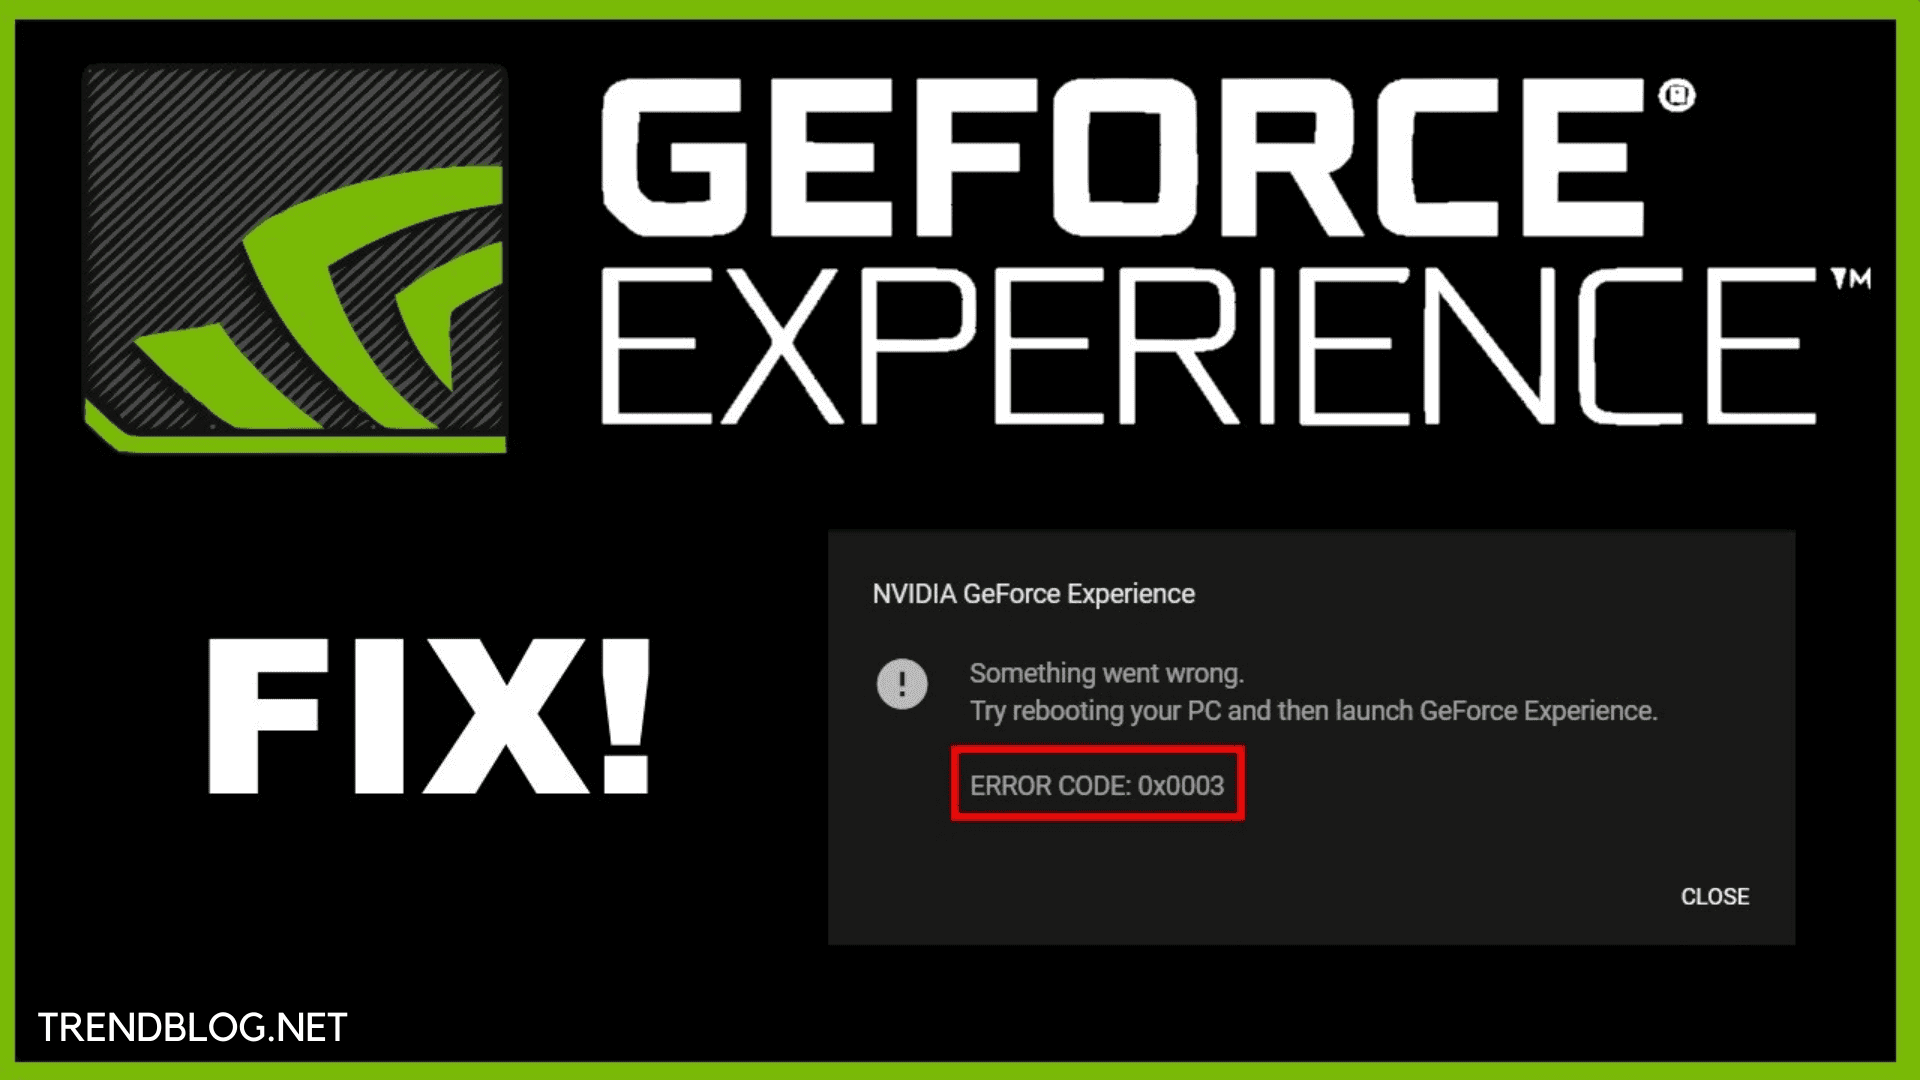 Джифорс экспириенс. NVIDIA GEFORCE experience. Код GEFORCE experience. Ошибка 0x0003 GEFORCE experience.